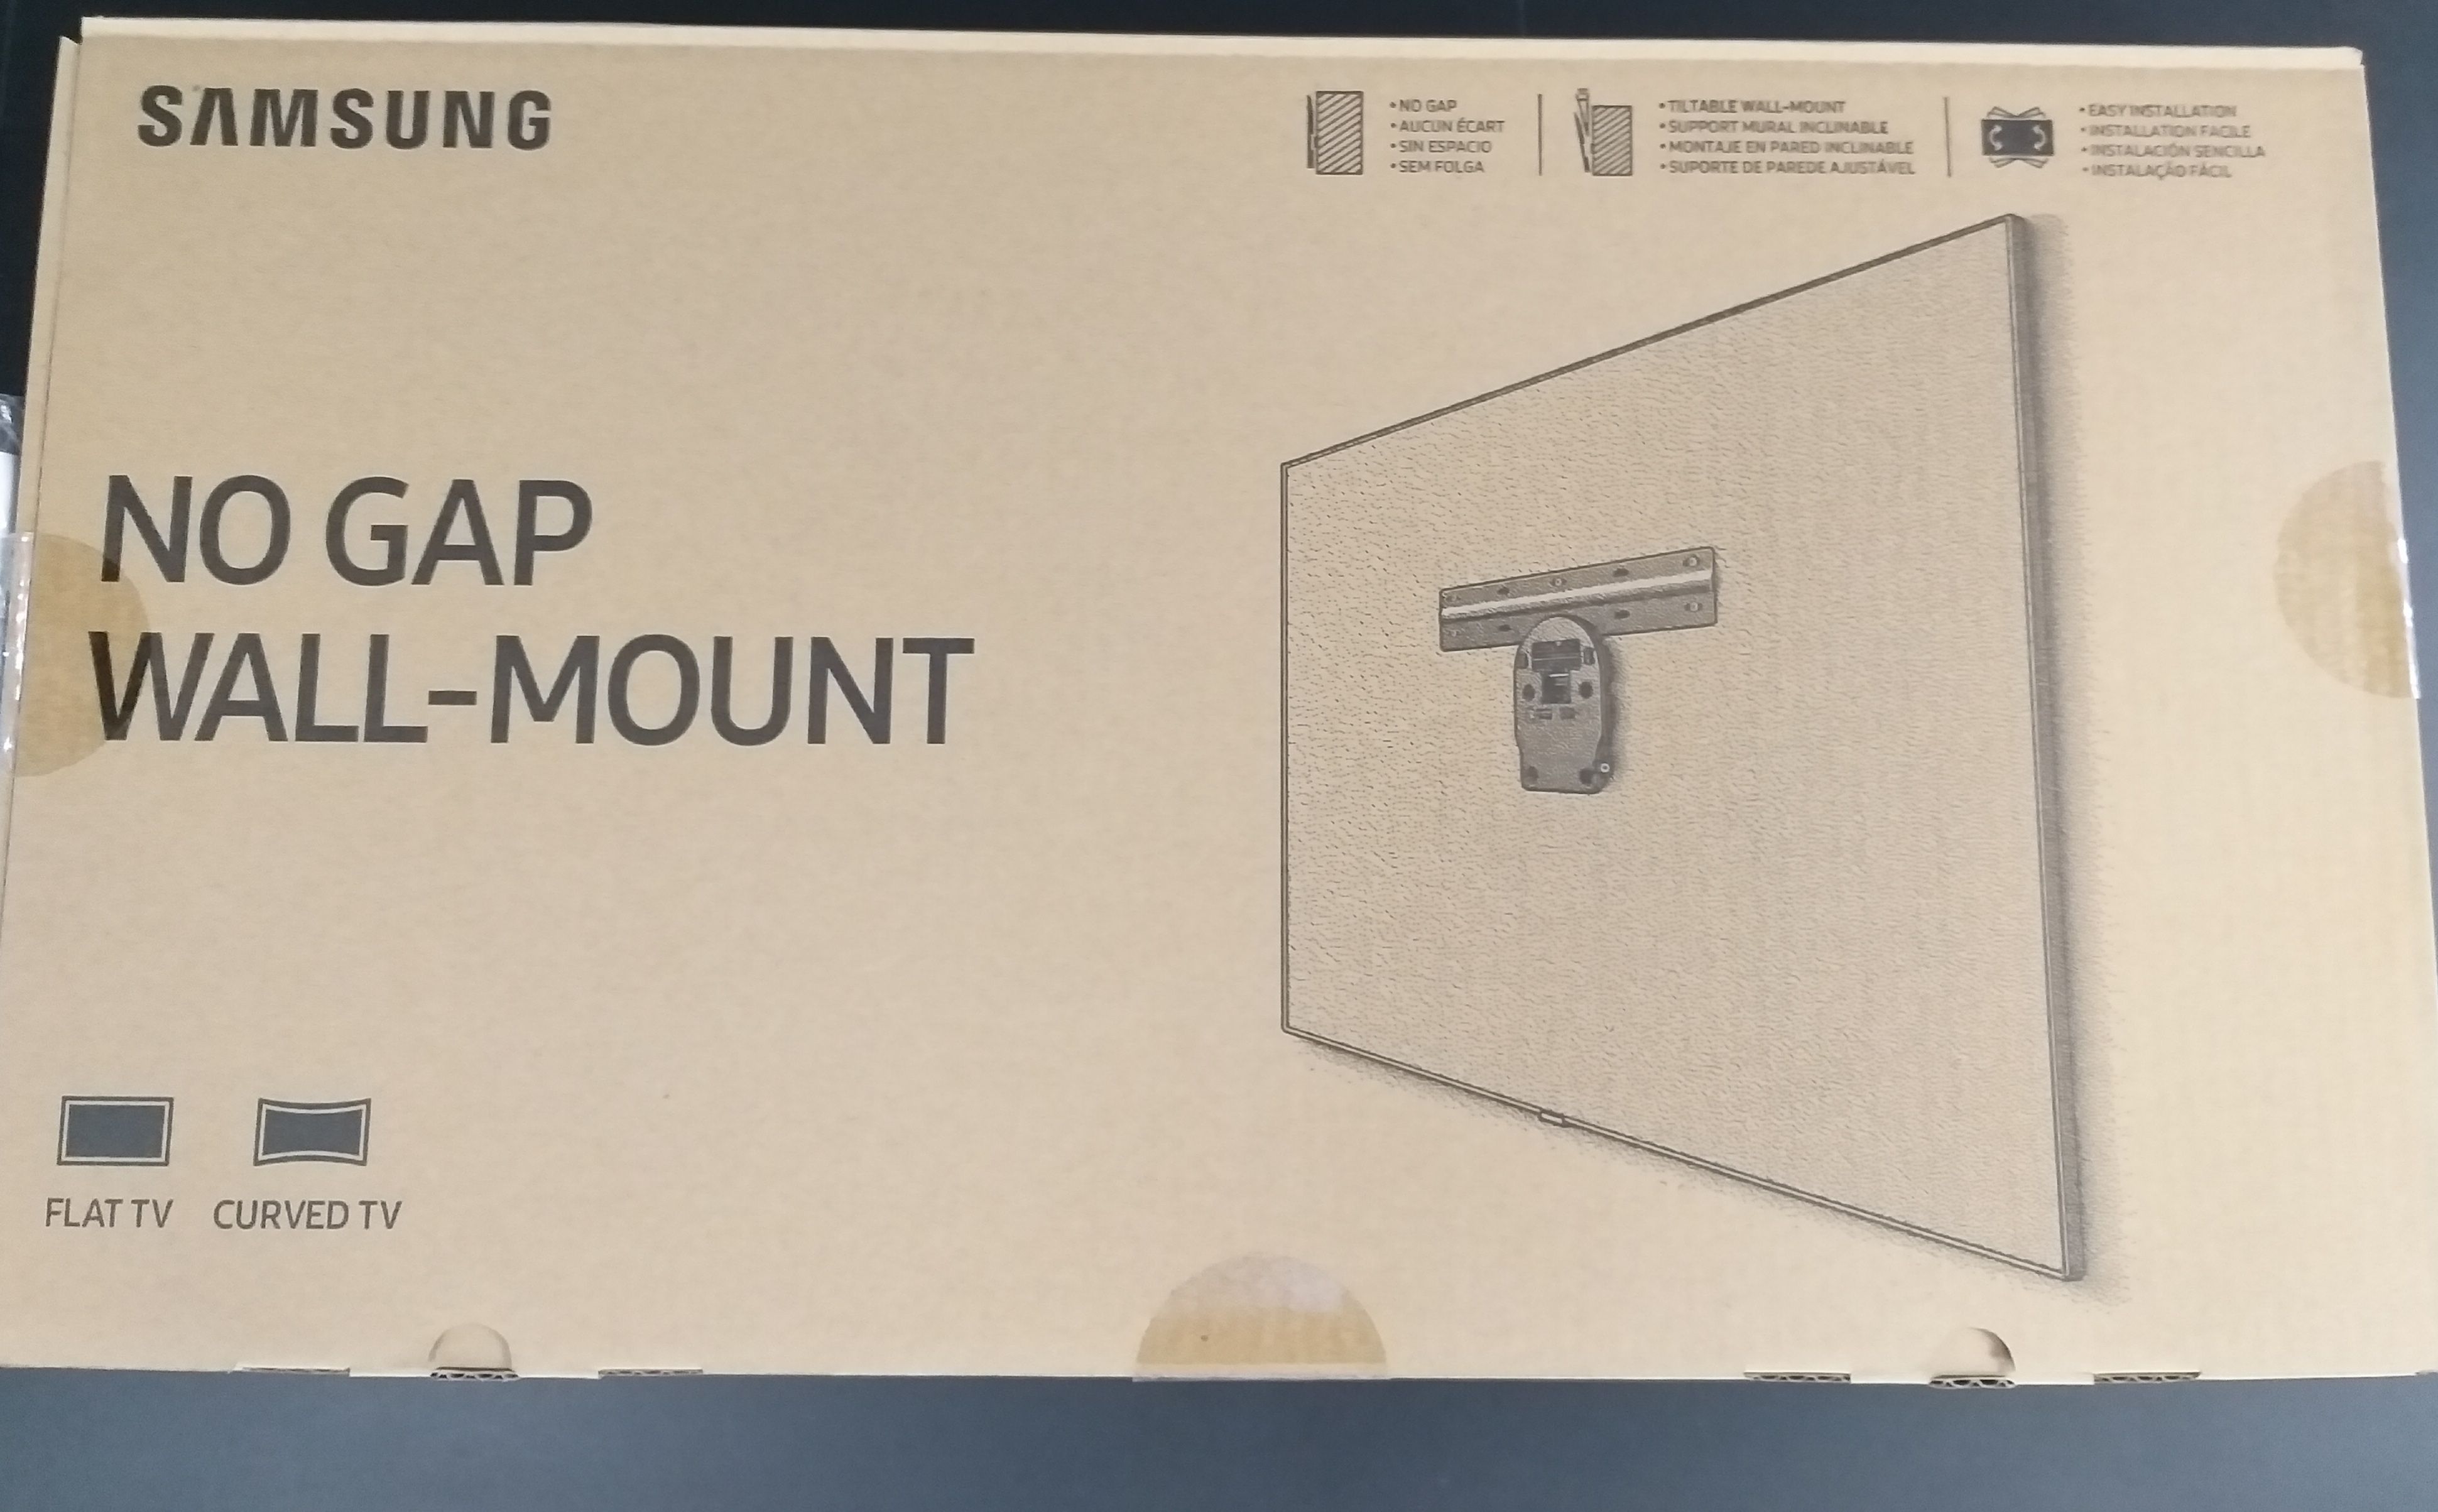 Samsung falikonzol - No Gap Wall-mount - Samsung Community